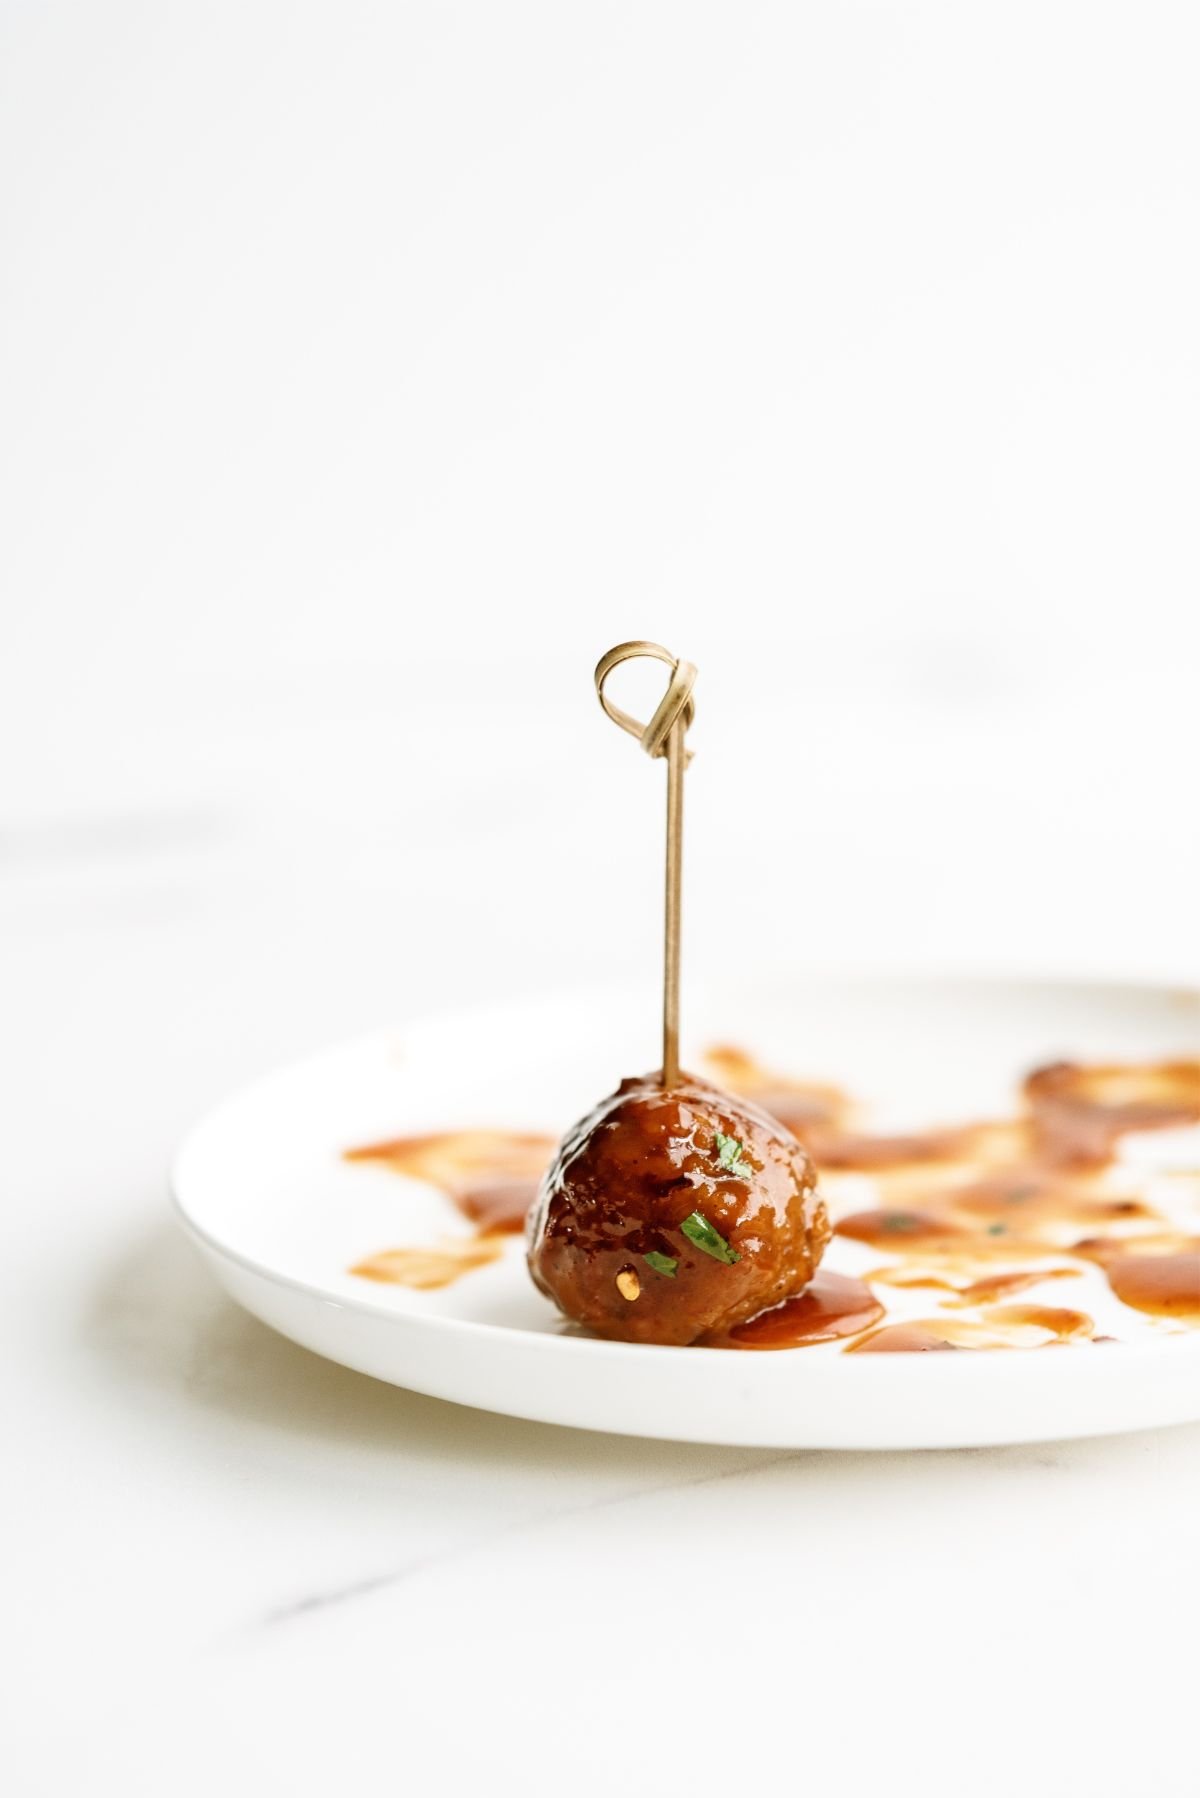 One Slow Cooker Honey Buffalo Meatball on a plate